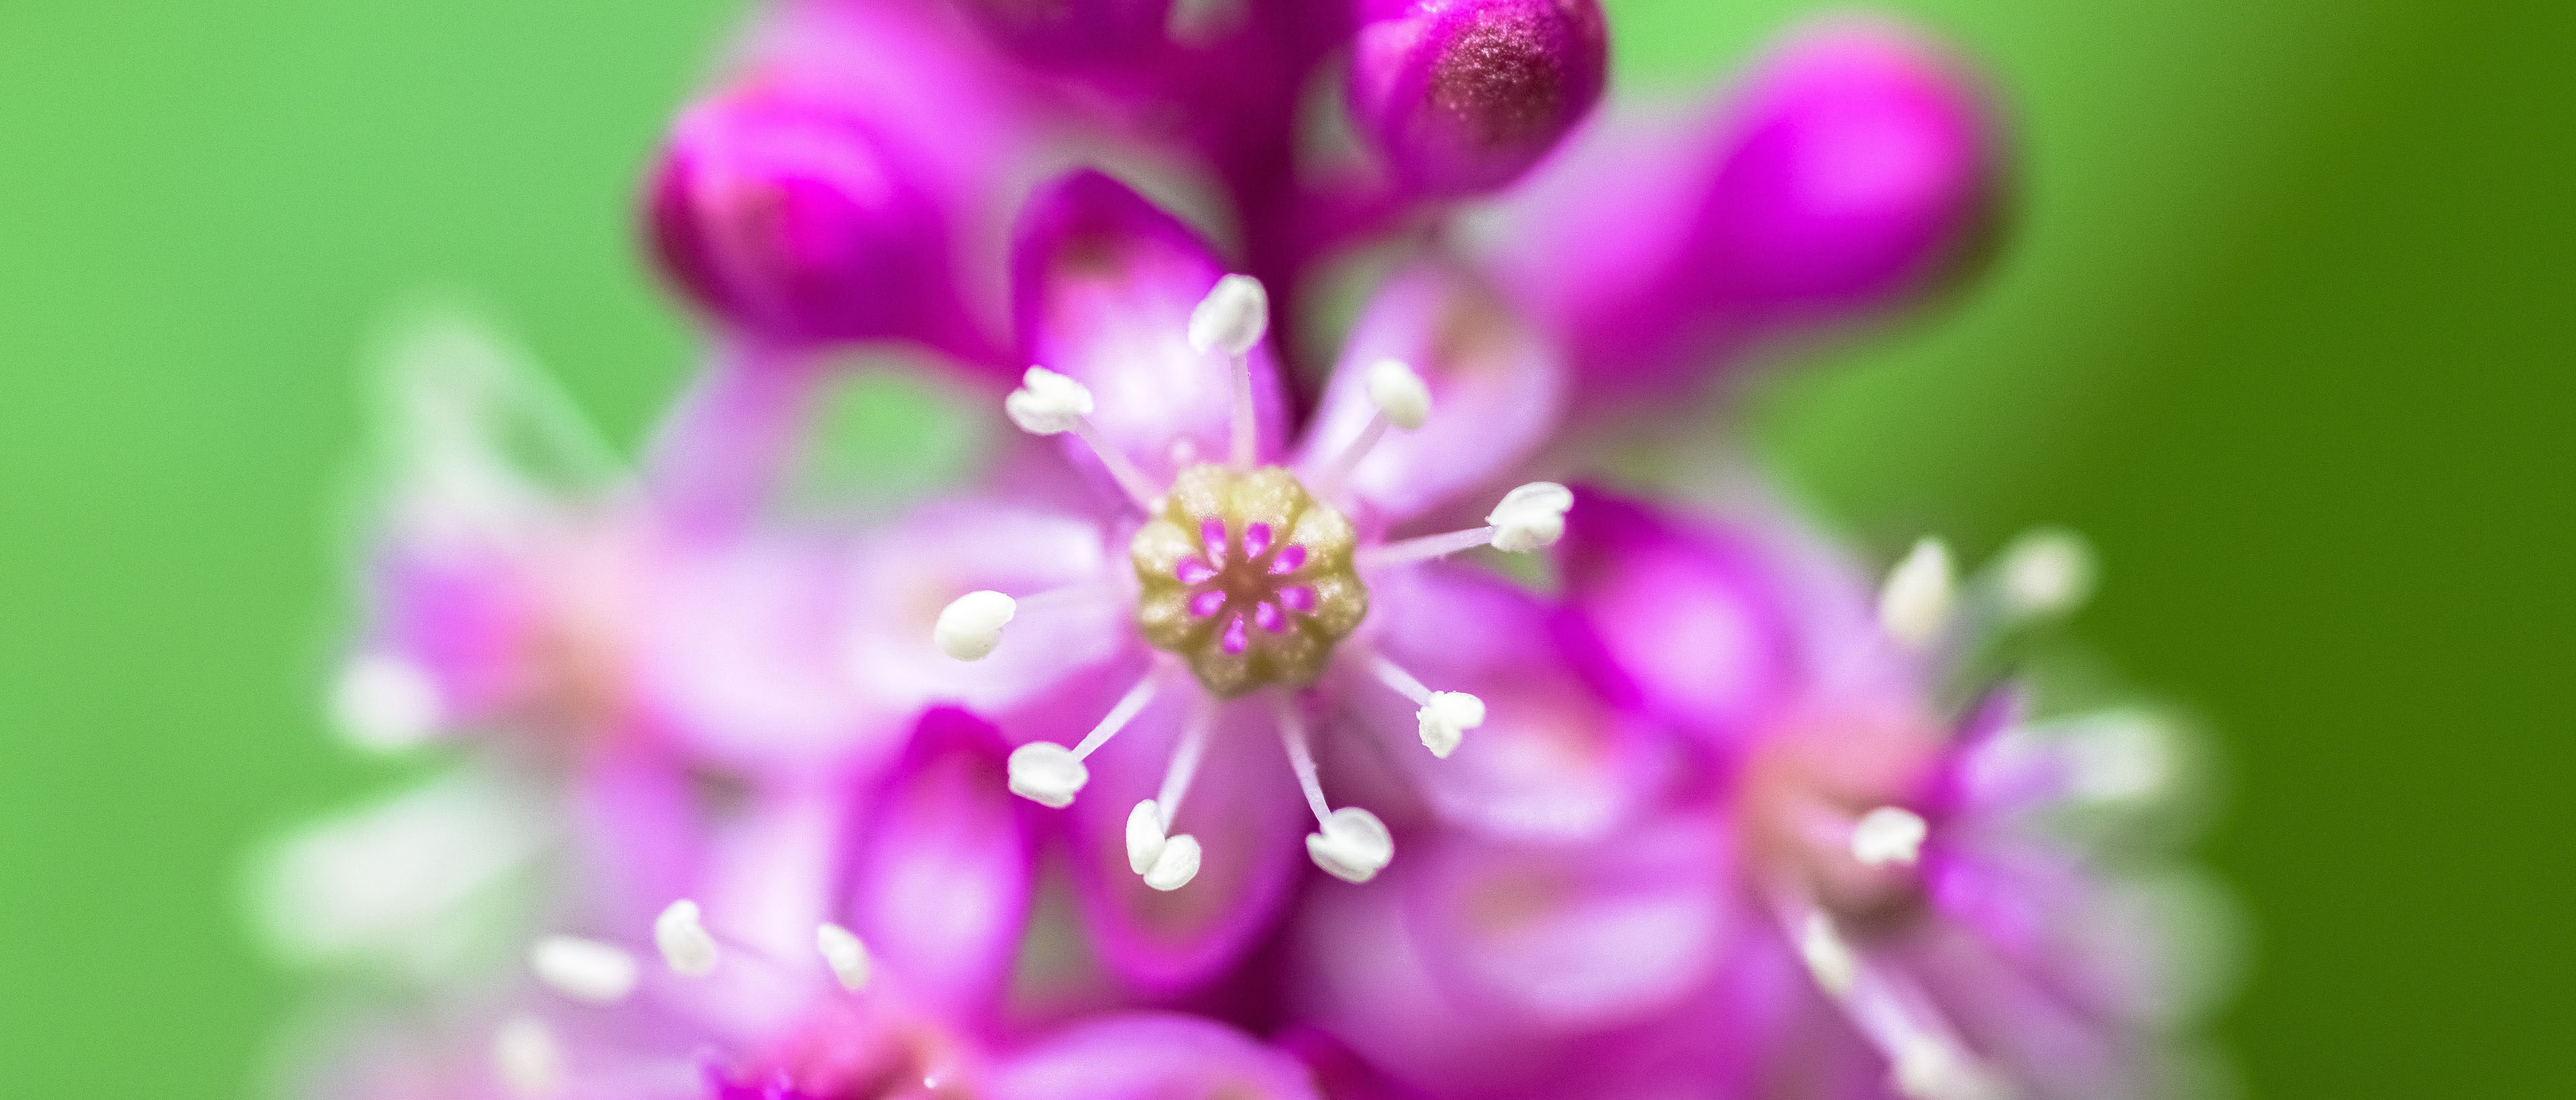 Preview Image: Flower Power: Atemberaubende Blumenfotos